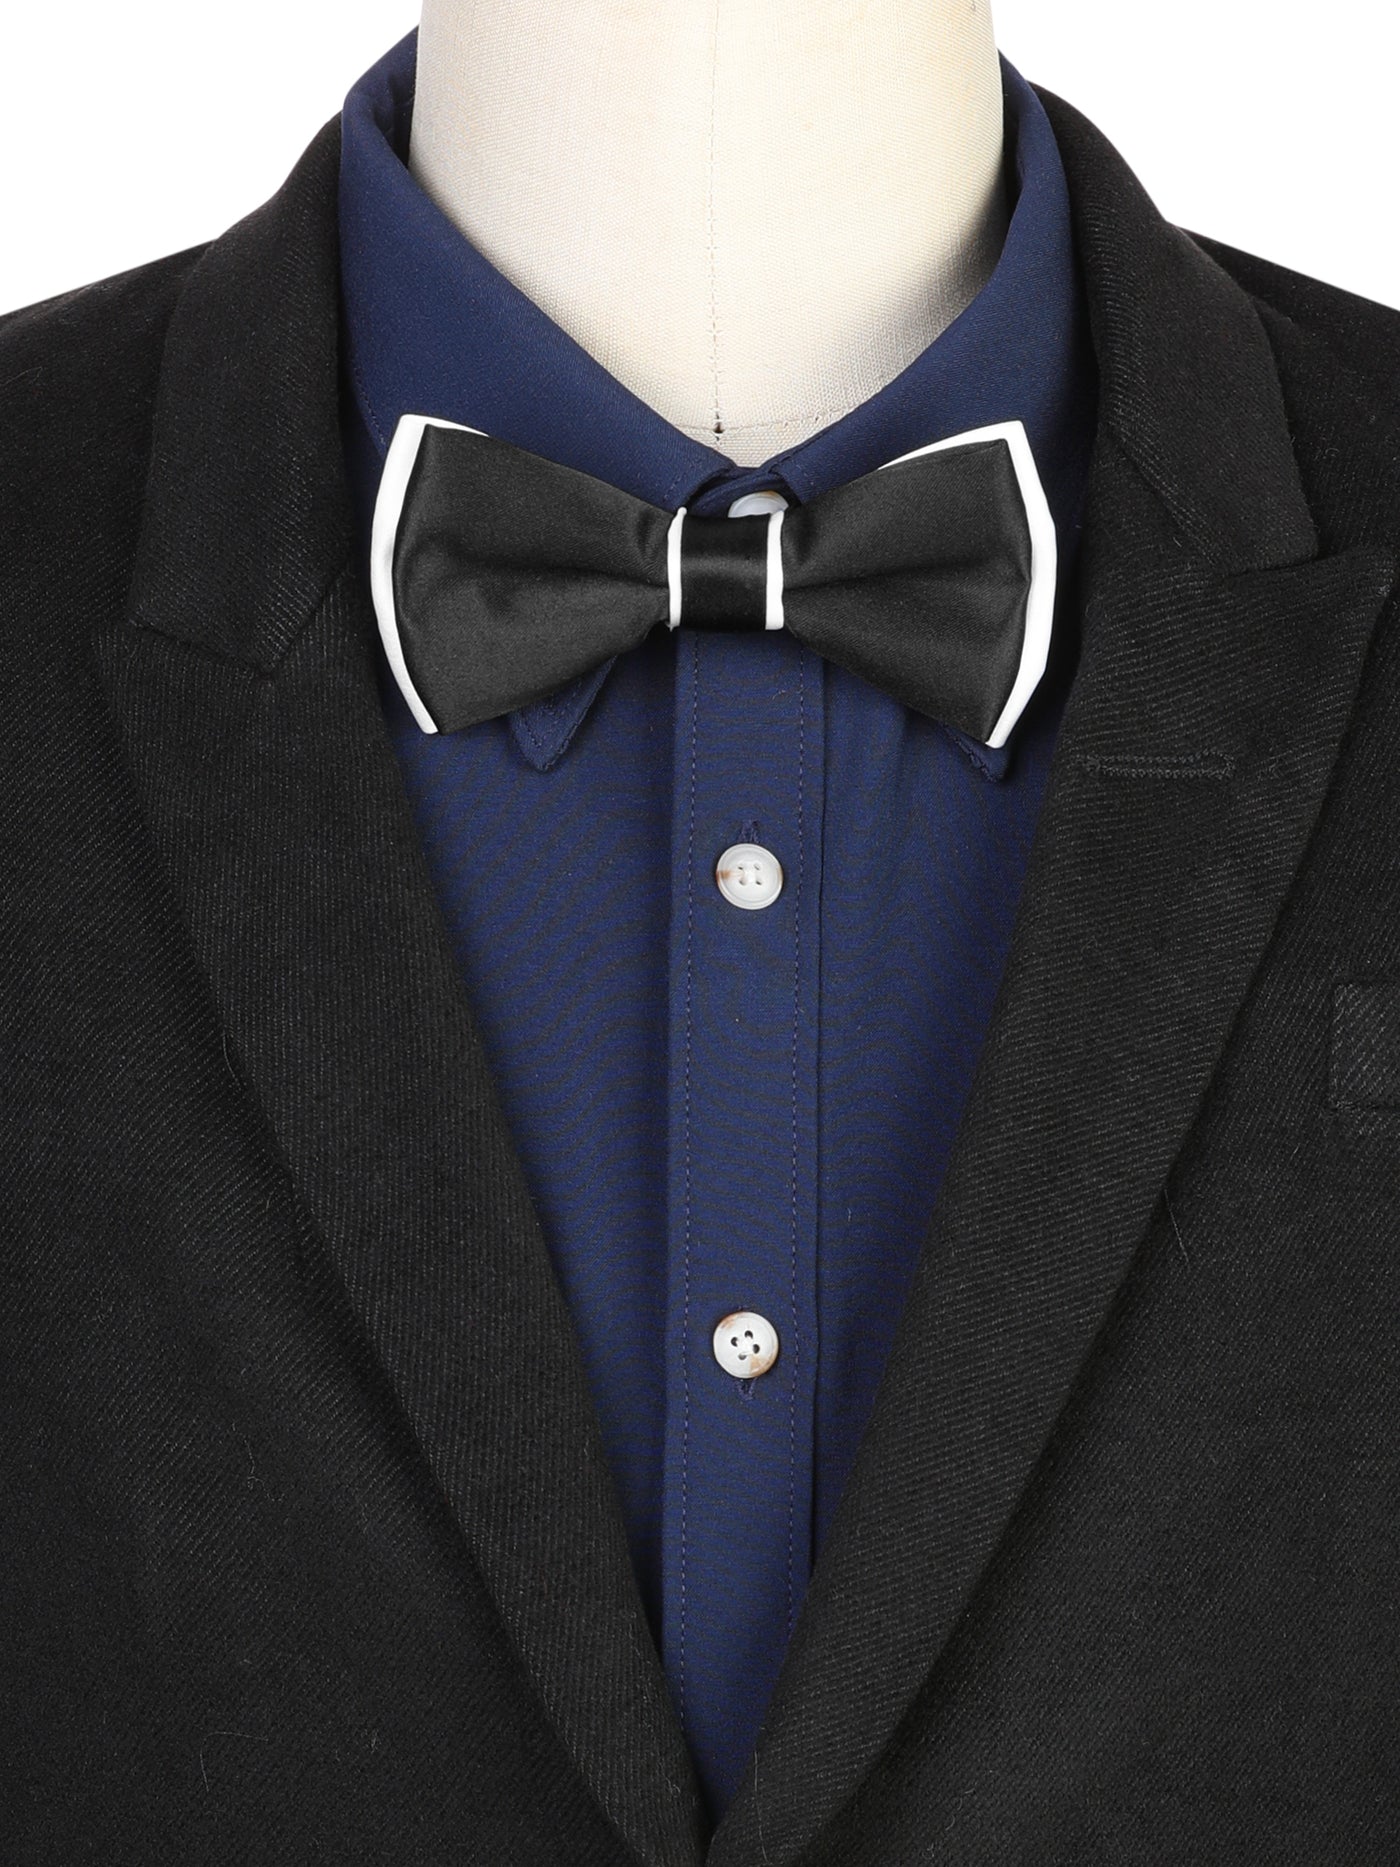 Bublédon Men's Contarst Color Pre-tied Bow Ties Tuxedo Business Formal Adjustable Block Bowtie